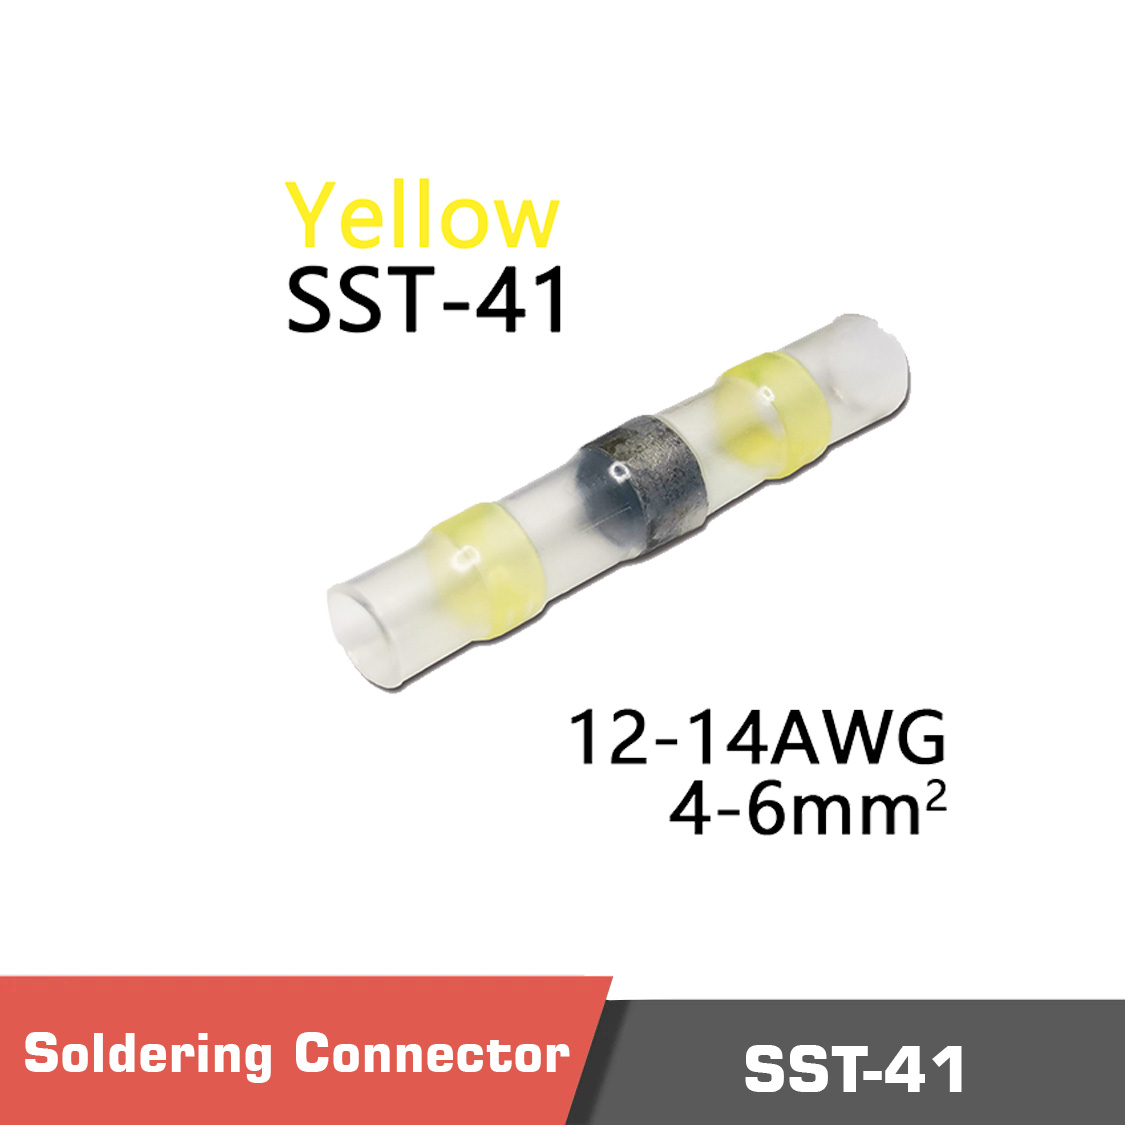 Sst 41 - sst-31,sst-31 soldering connector,soldering connector - motionew - 14